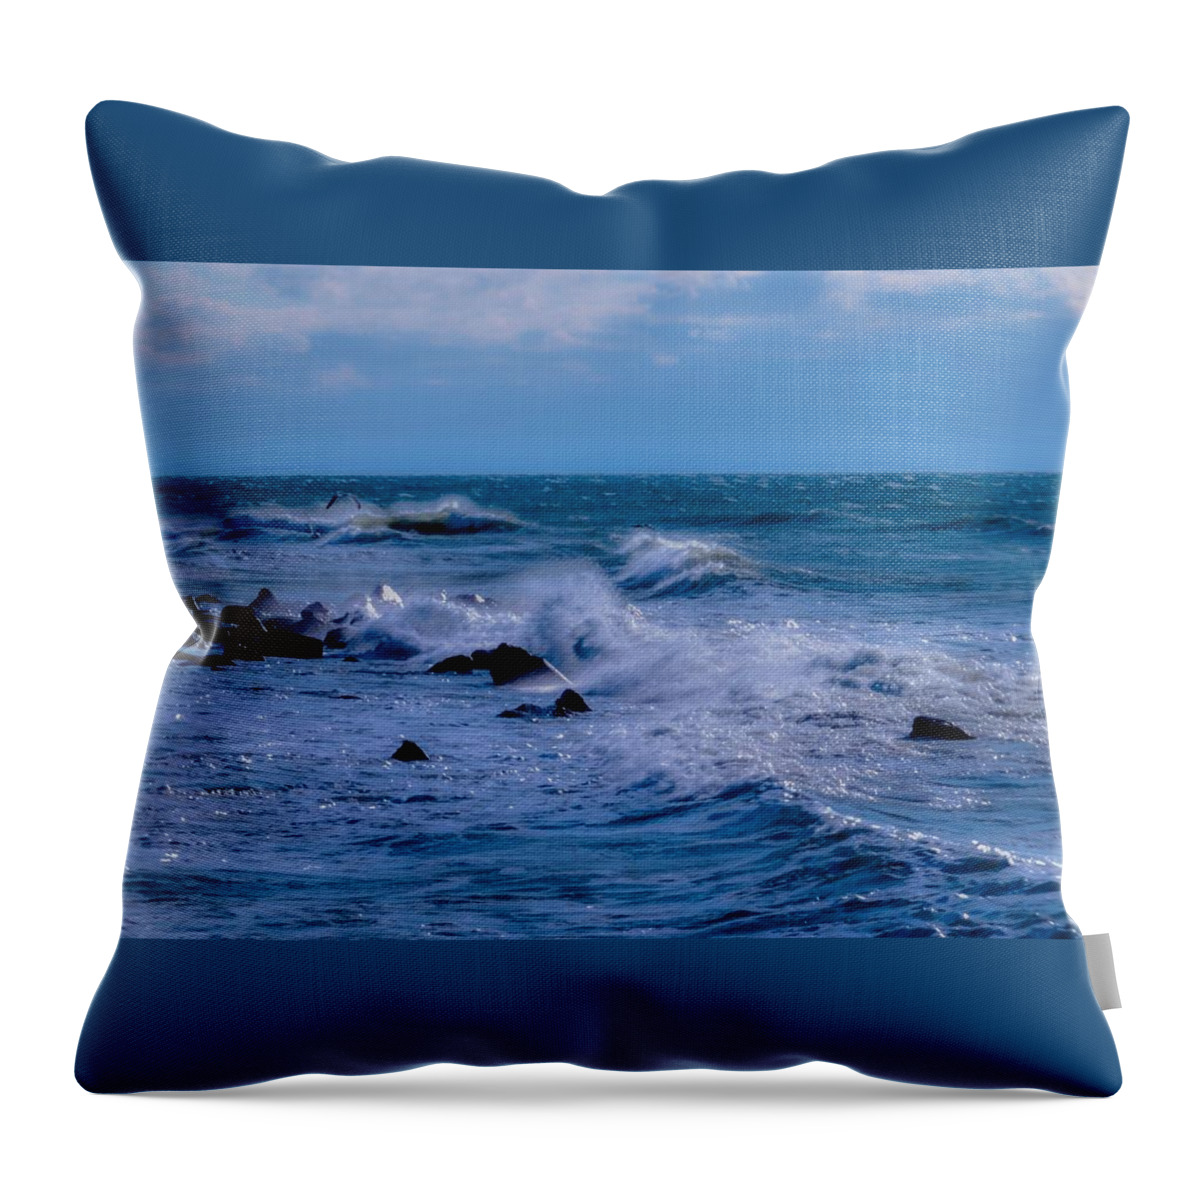 Waves Crashing Throw Pillow featuring the photograph Sparkling waves by Christina McGoran